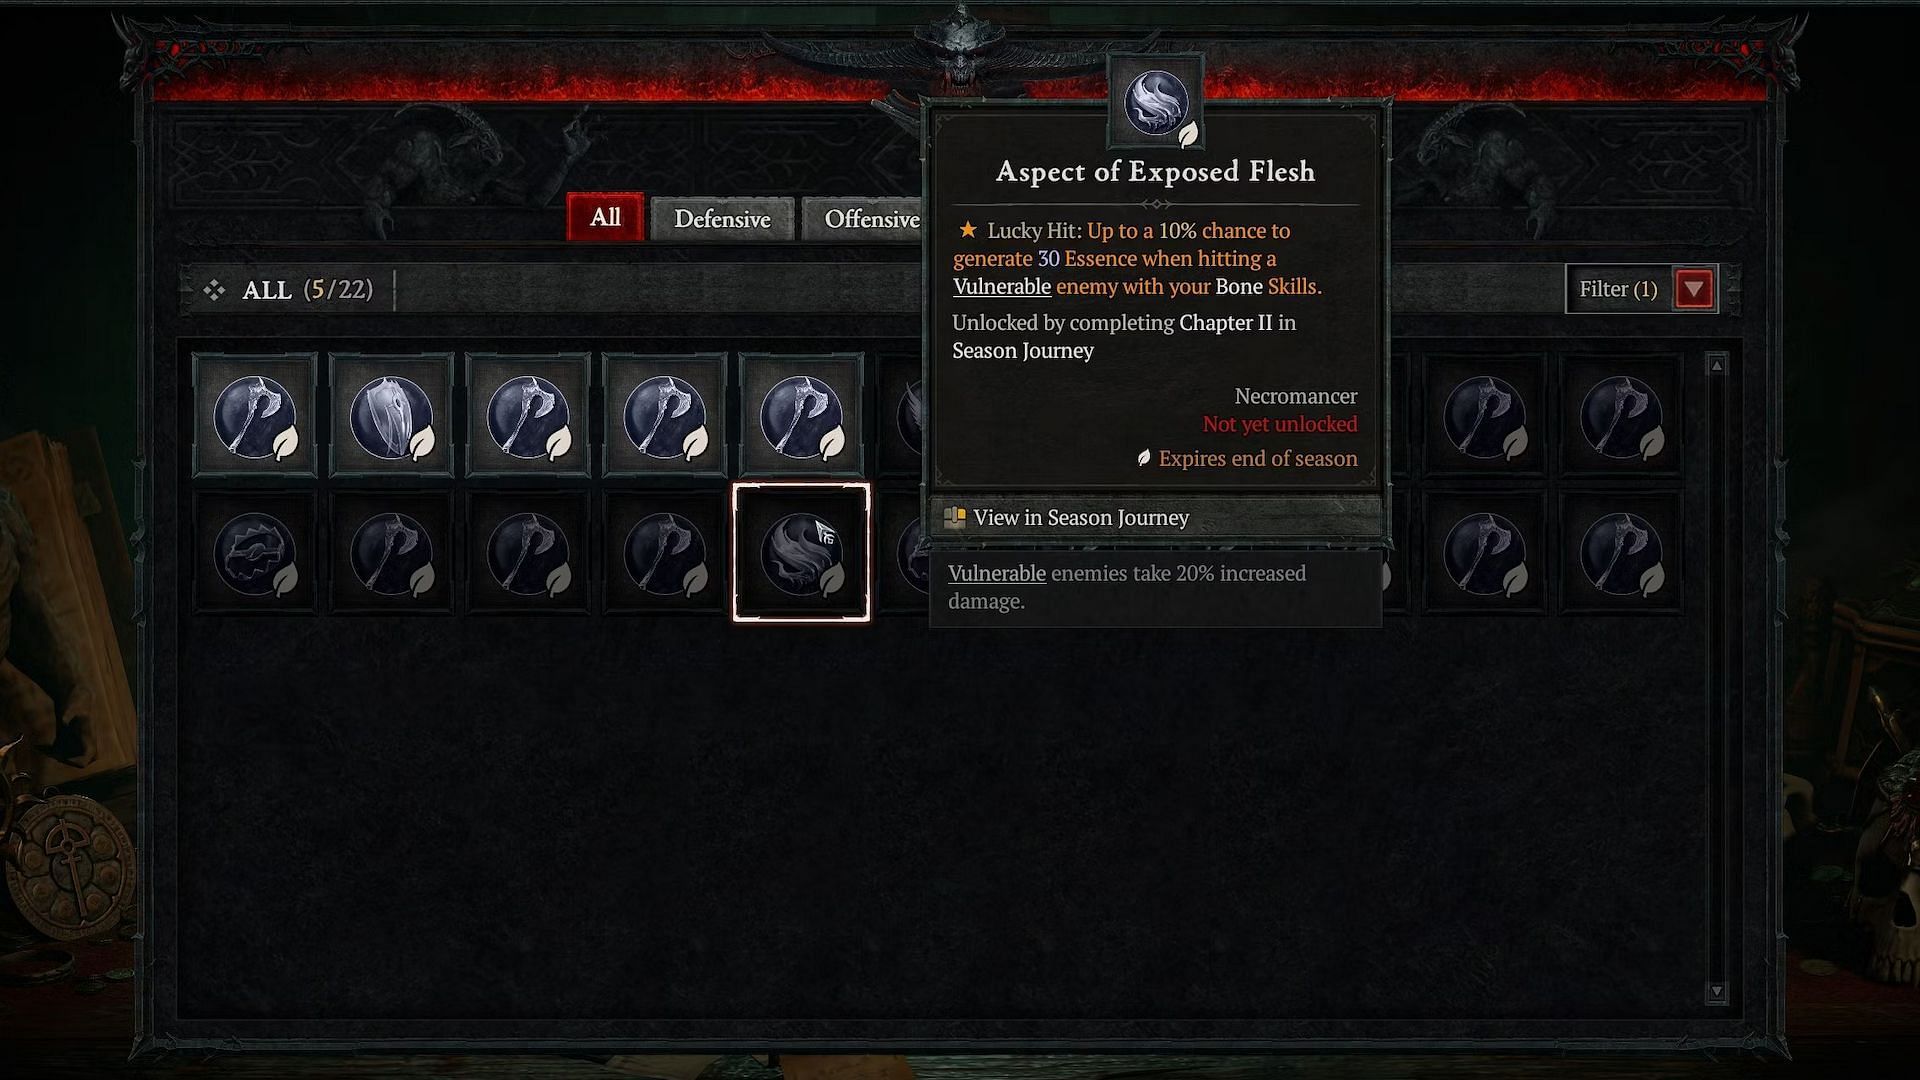 Aspect of Exposed Flesh grants extra Essence (Image via Diablo 4/Blizzard Entertainment)